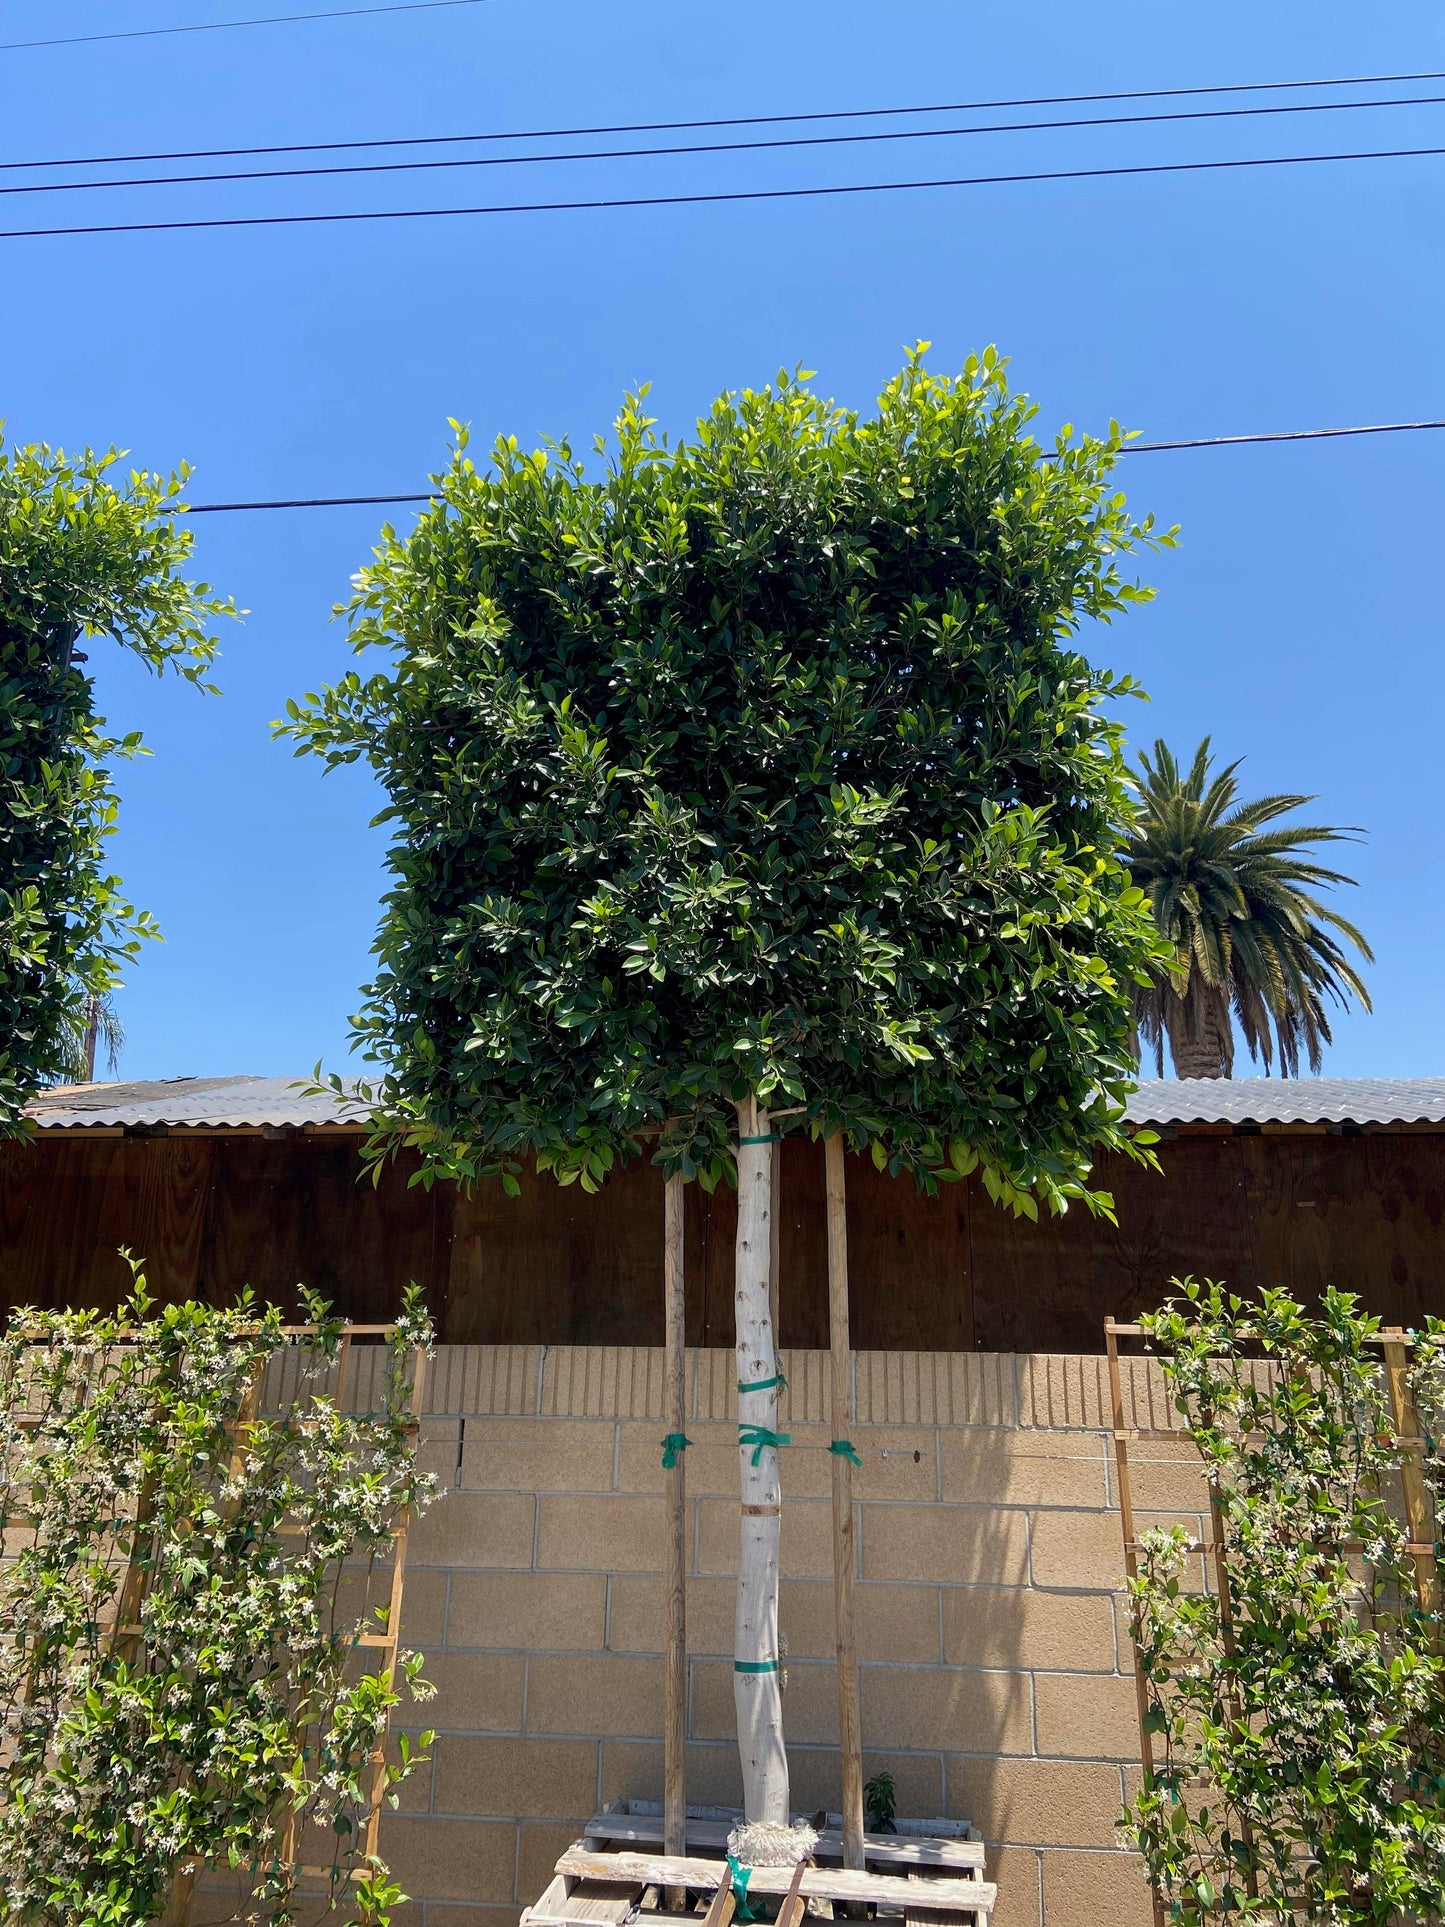 Indian Laurel Tree - Ficus microcarpa nitida - Pulled Nursery